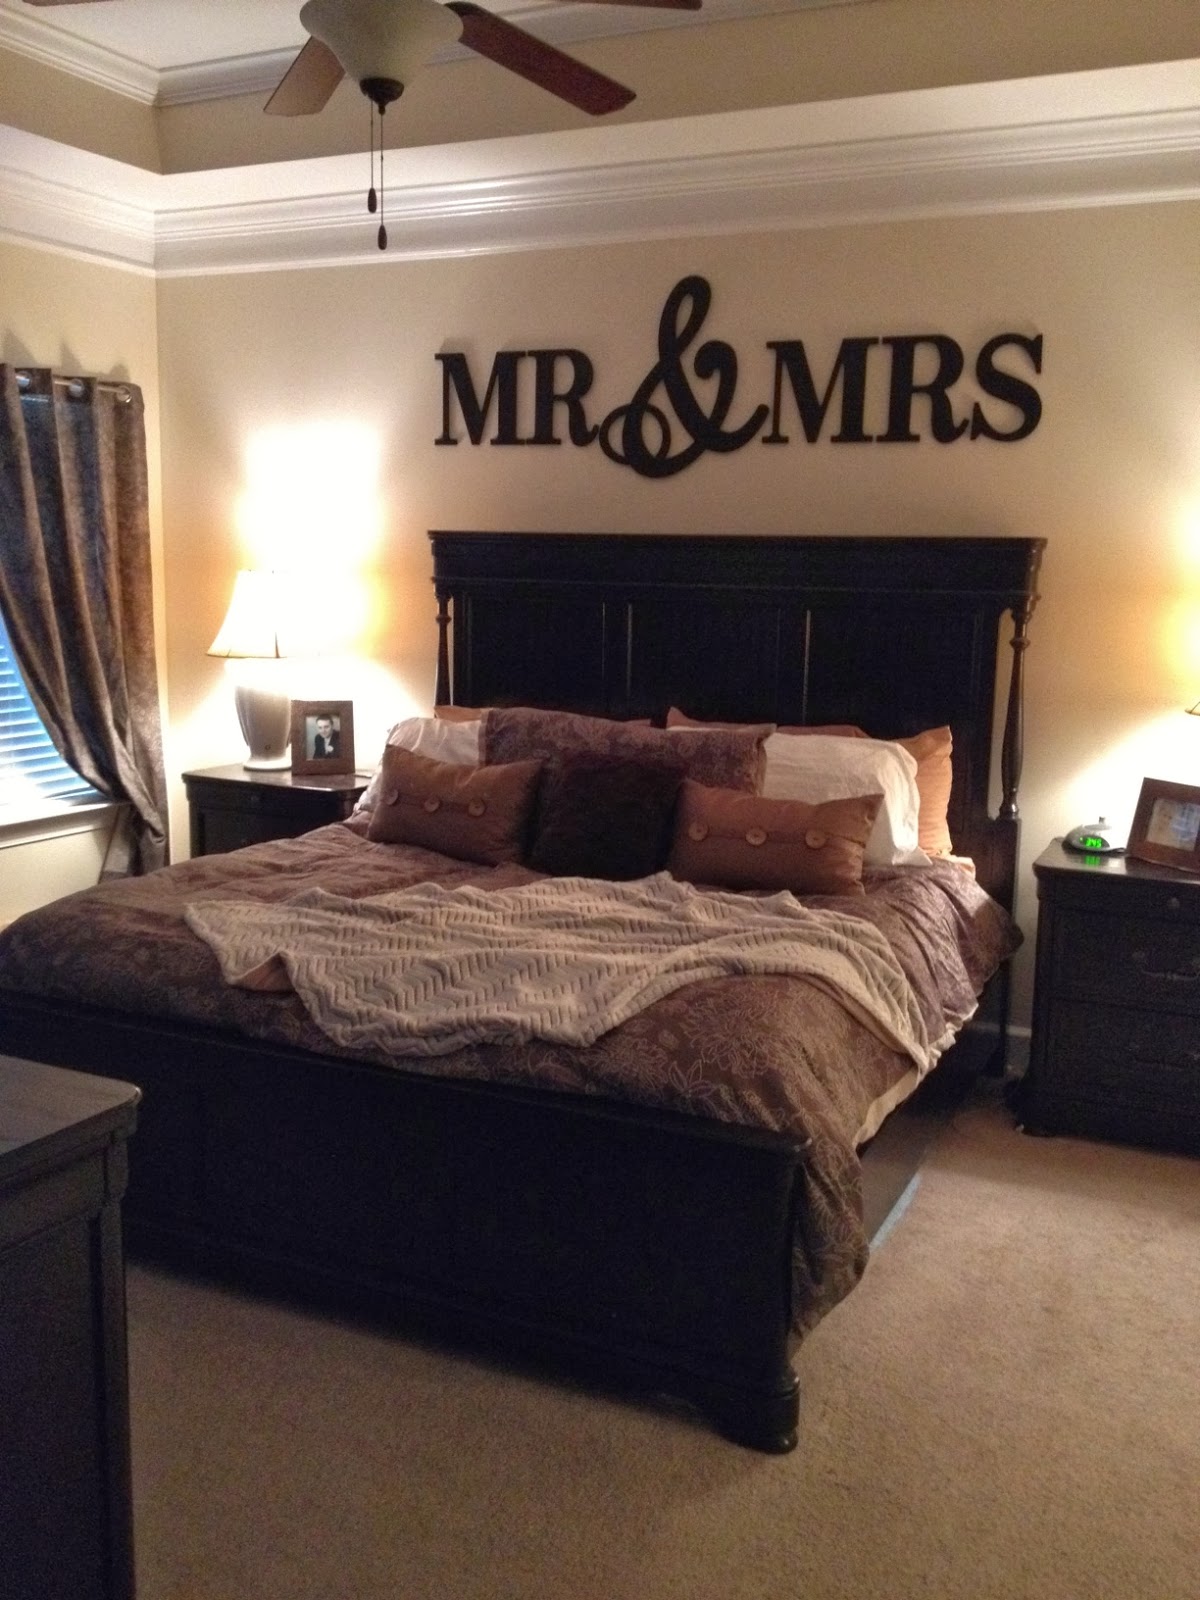 Husband and wife bedroom decor 6 8195.jpg